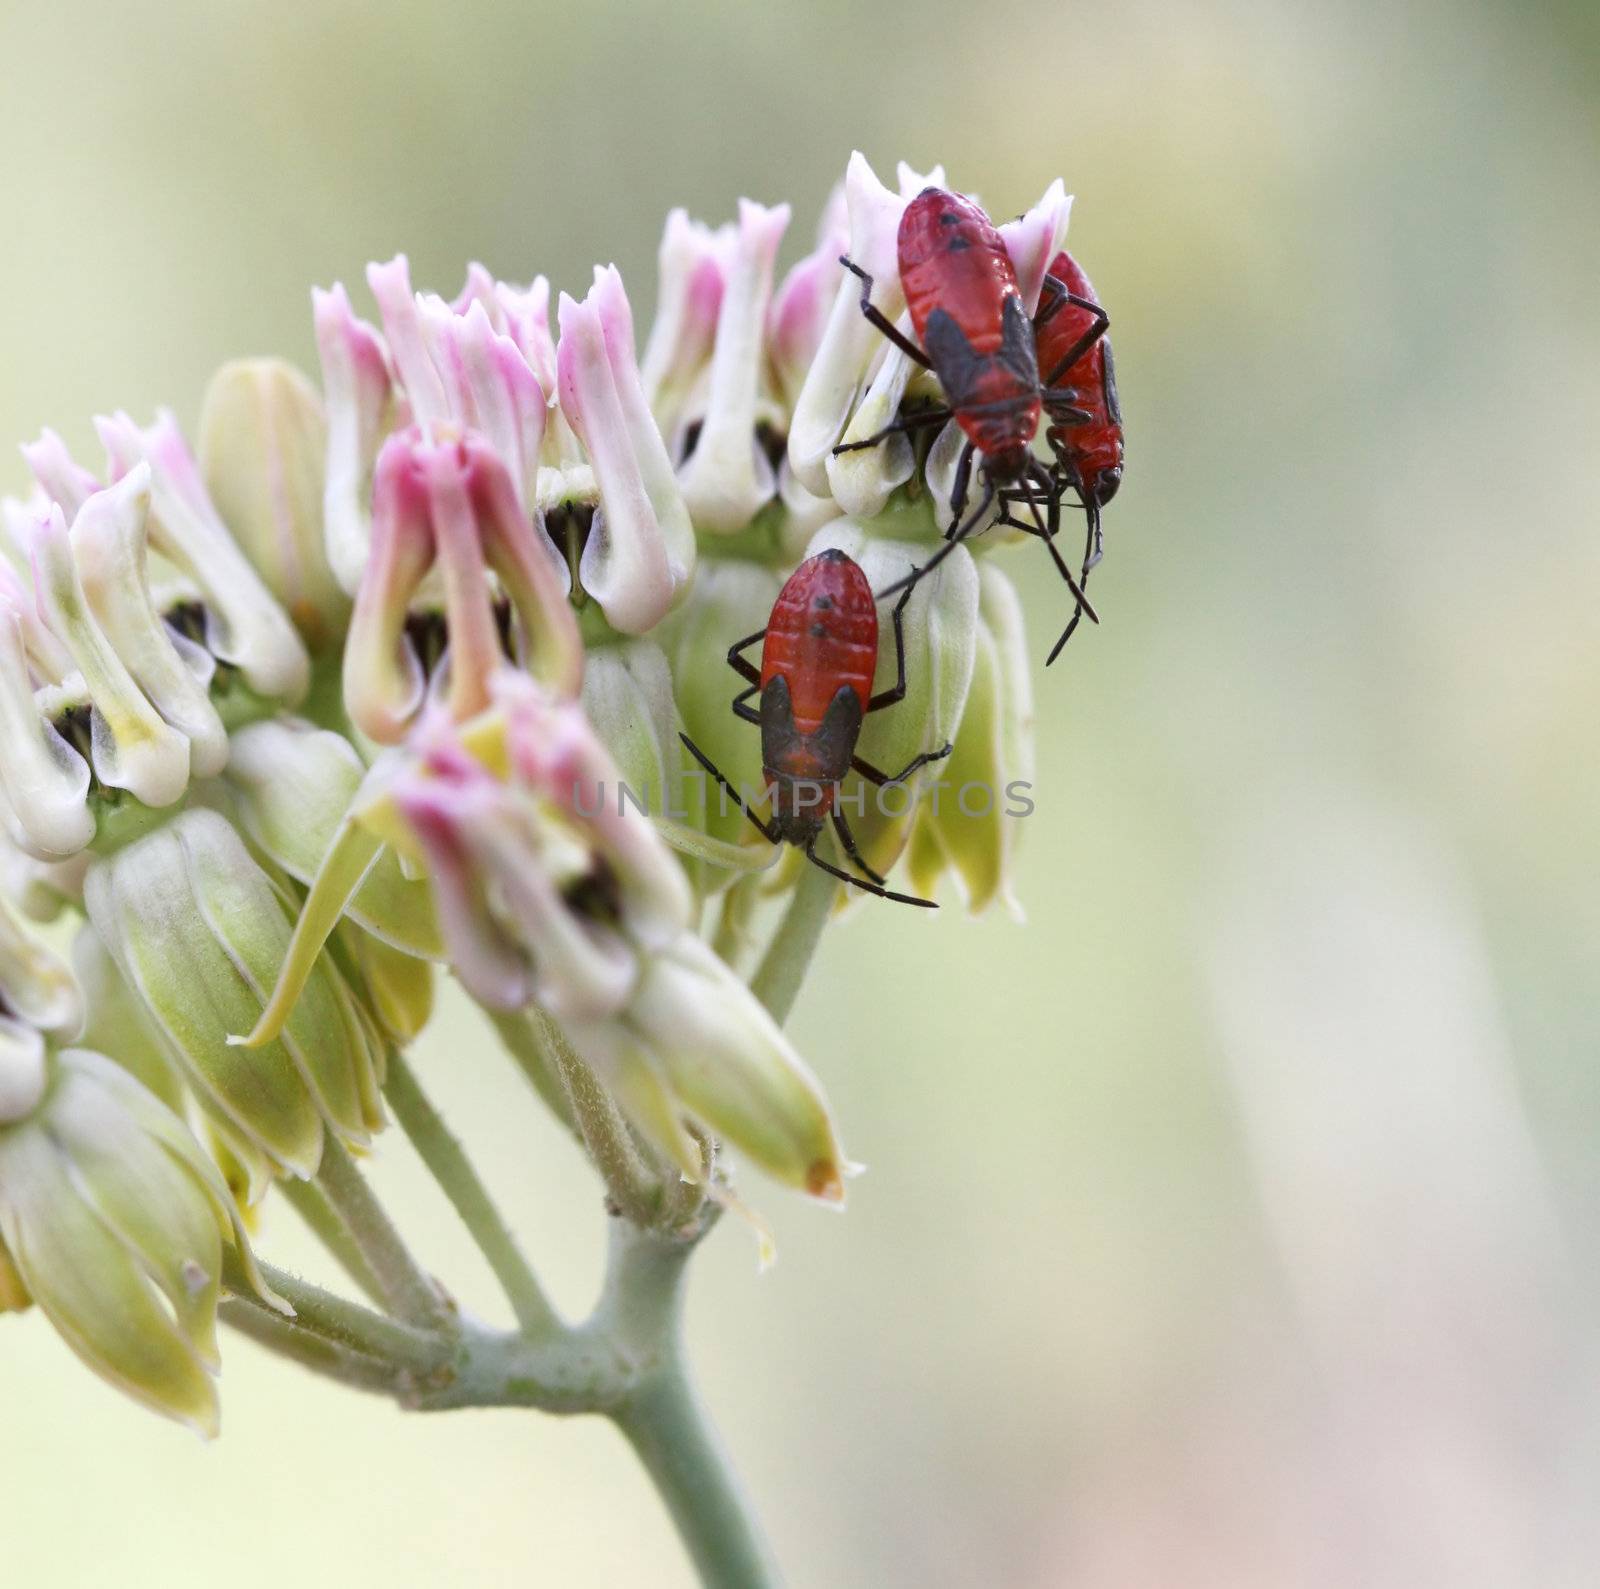 Red Beetles by deserttrends